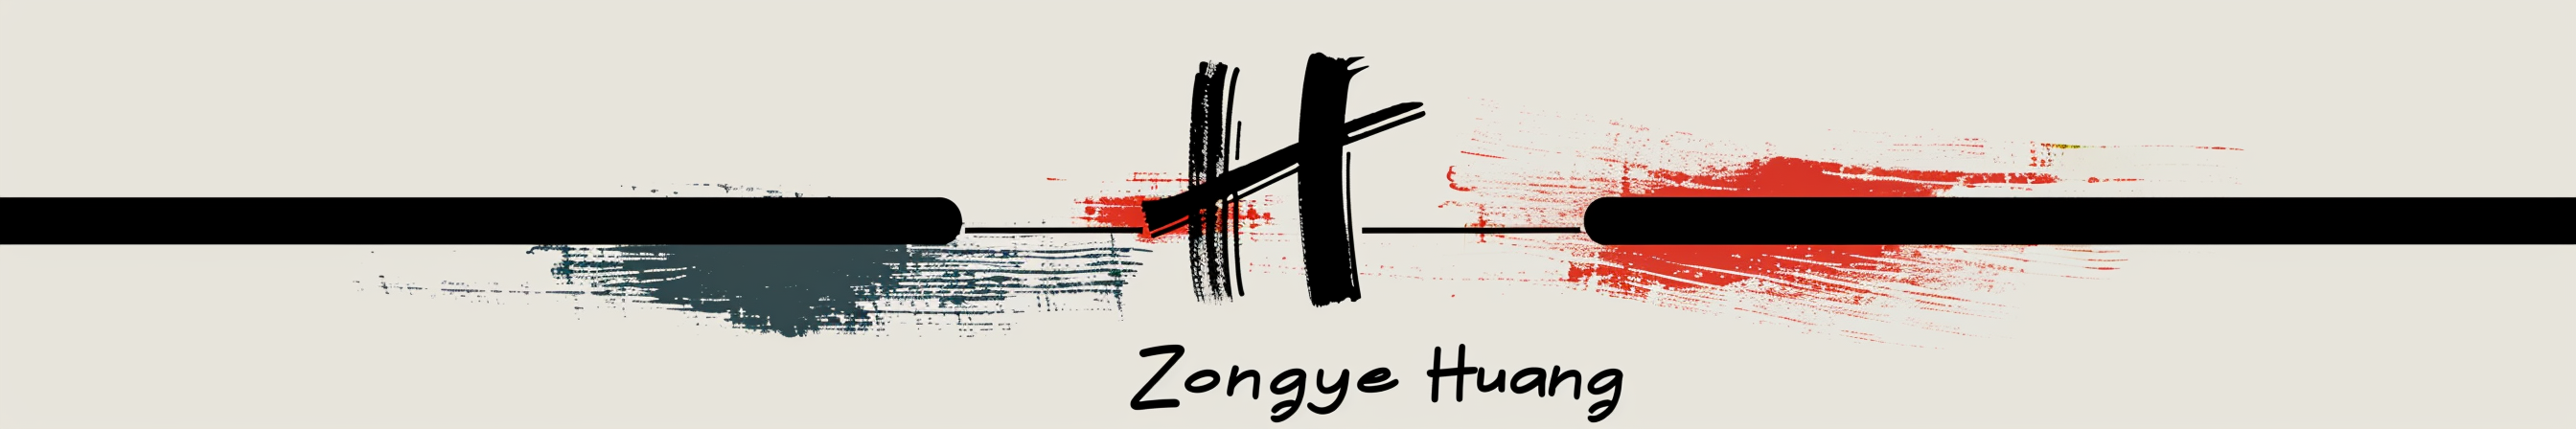 Zongye Huang's Personal Site